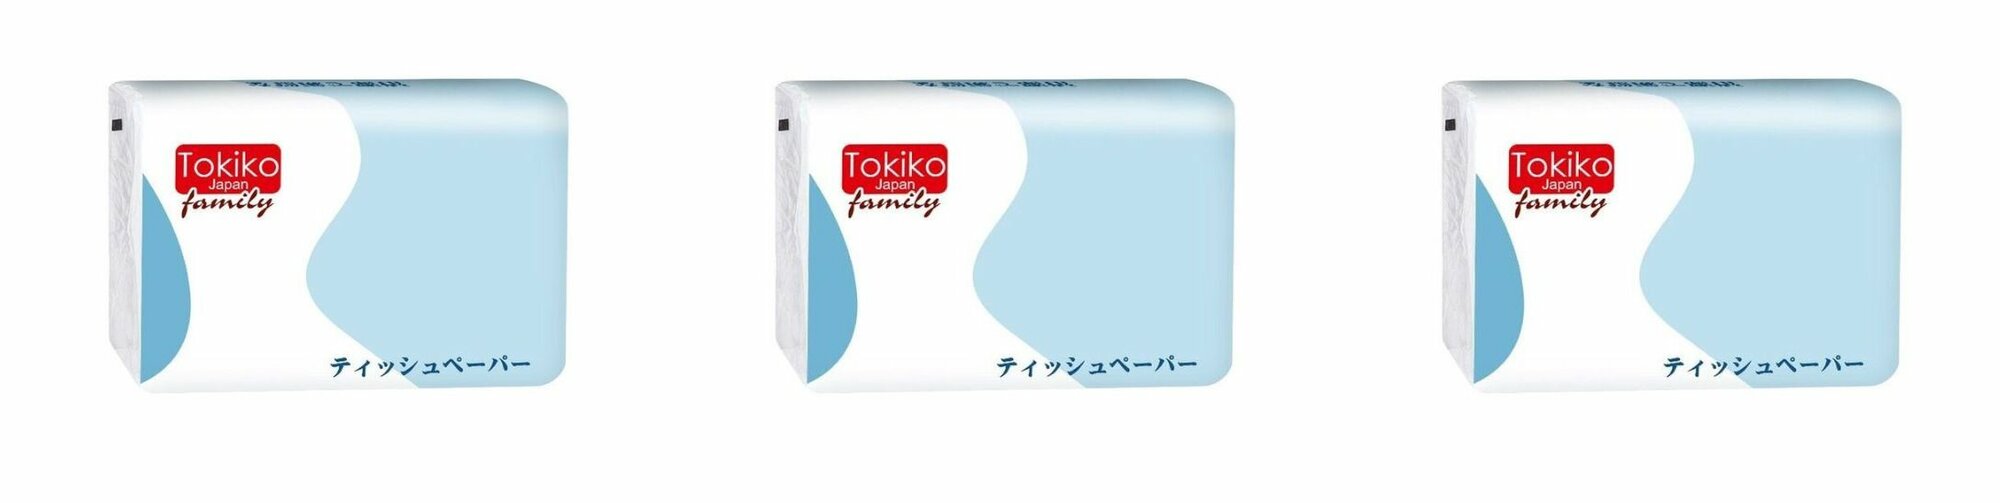 Tokiko Бумажные салфетки Japan Family 2-слойные, 250 шт, 3 уп